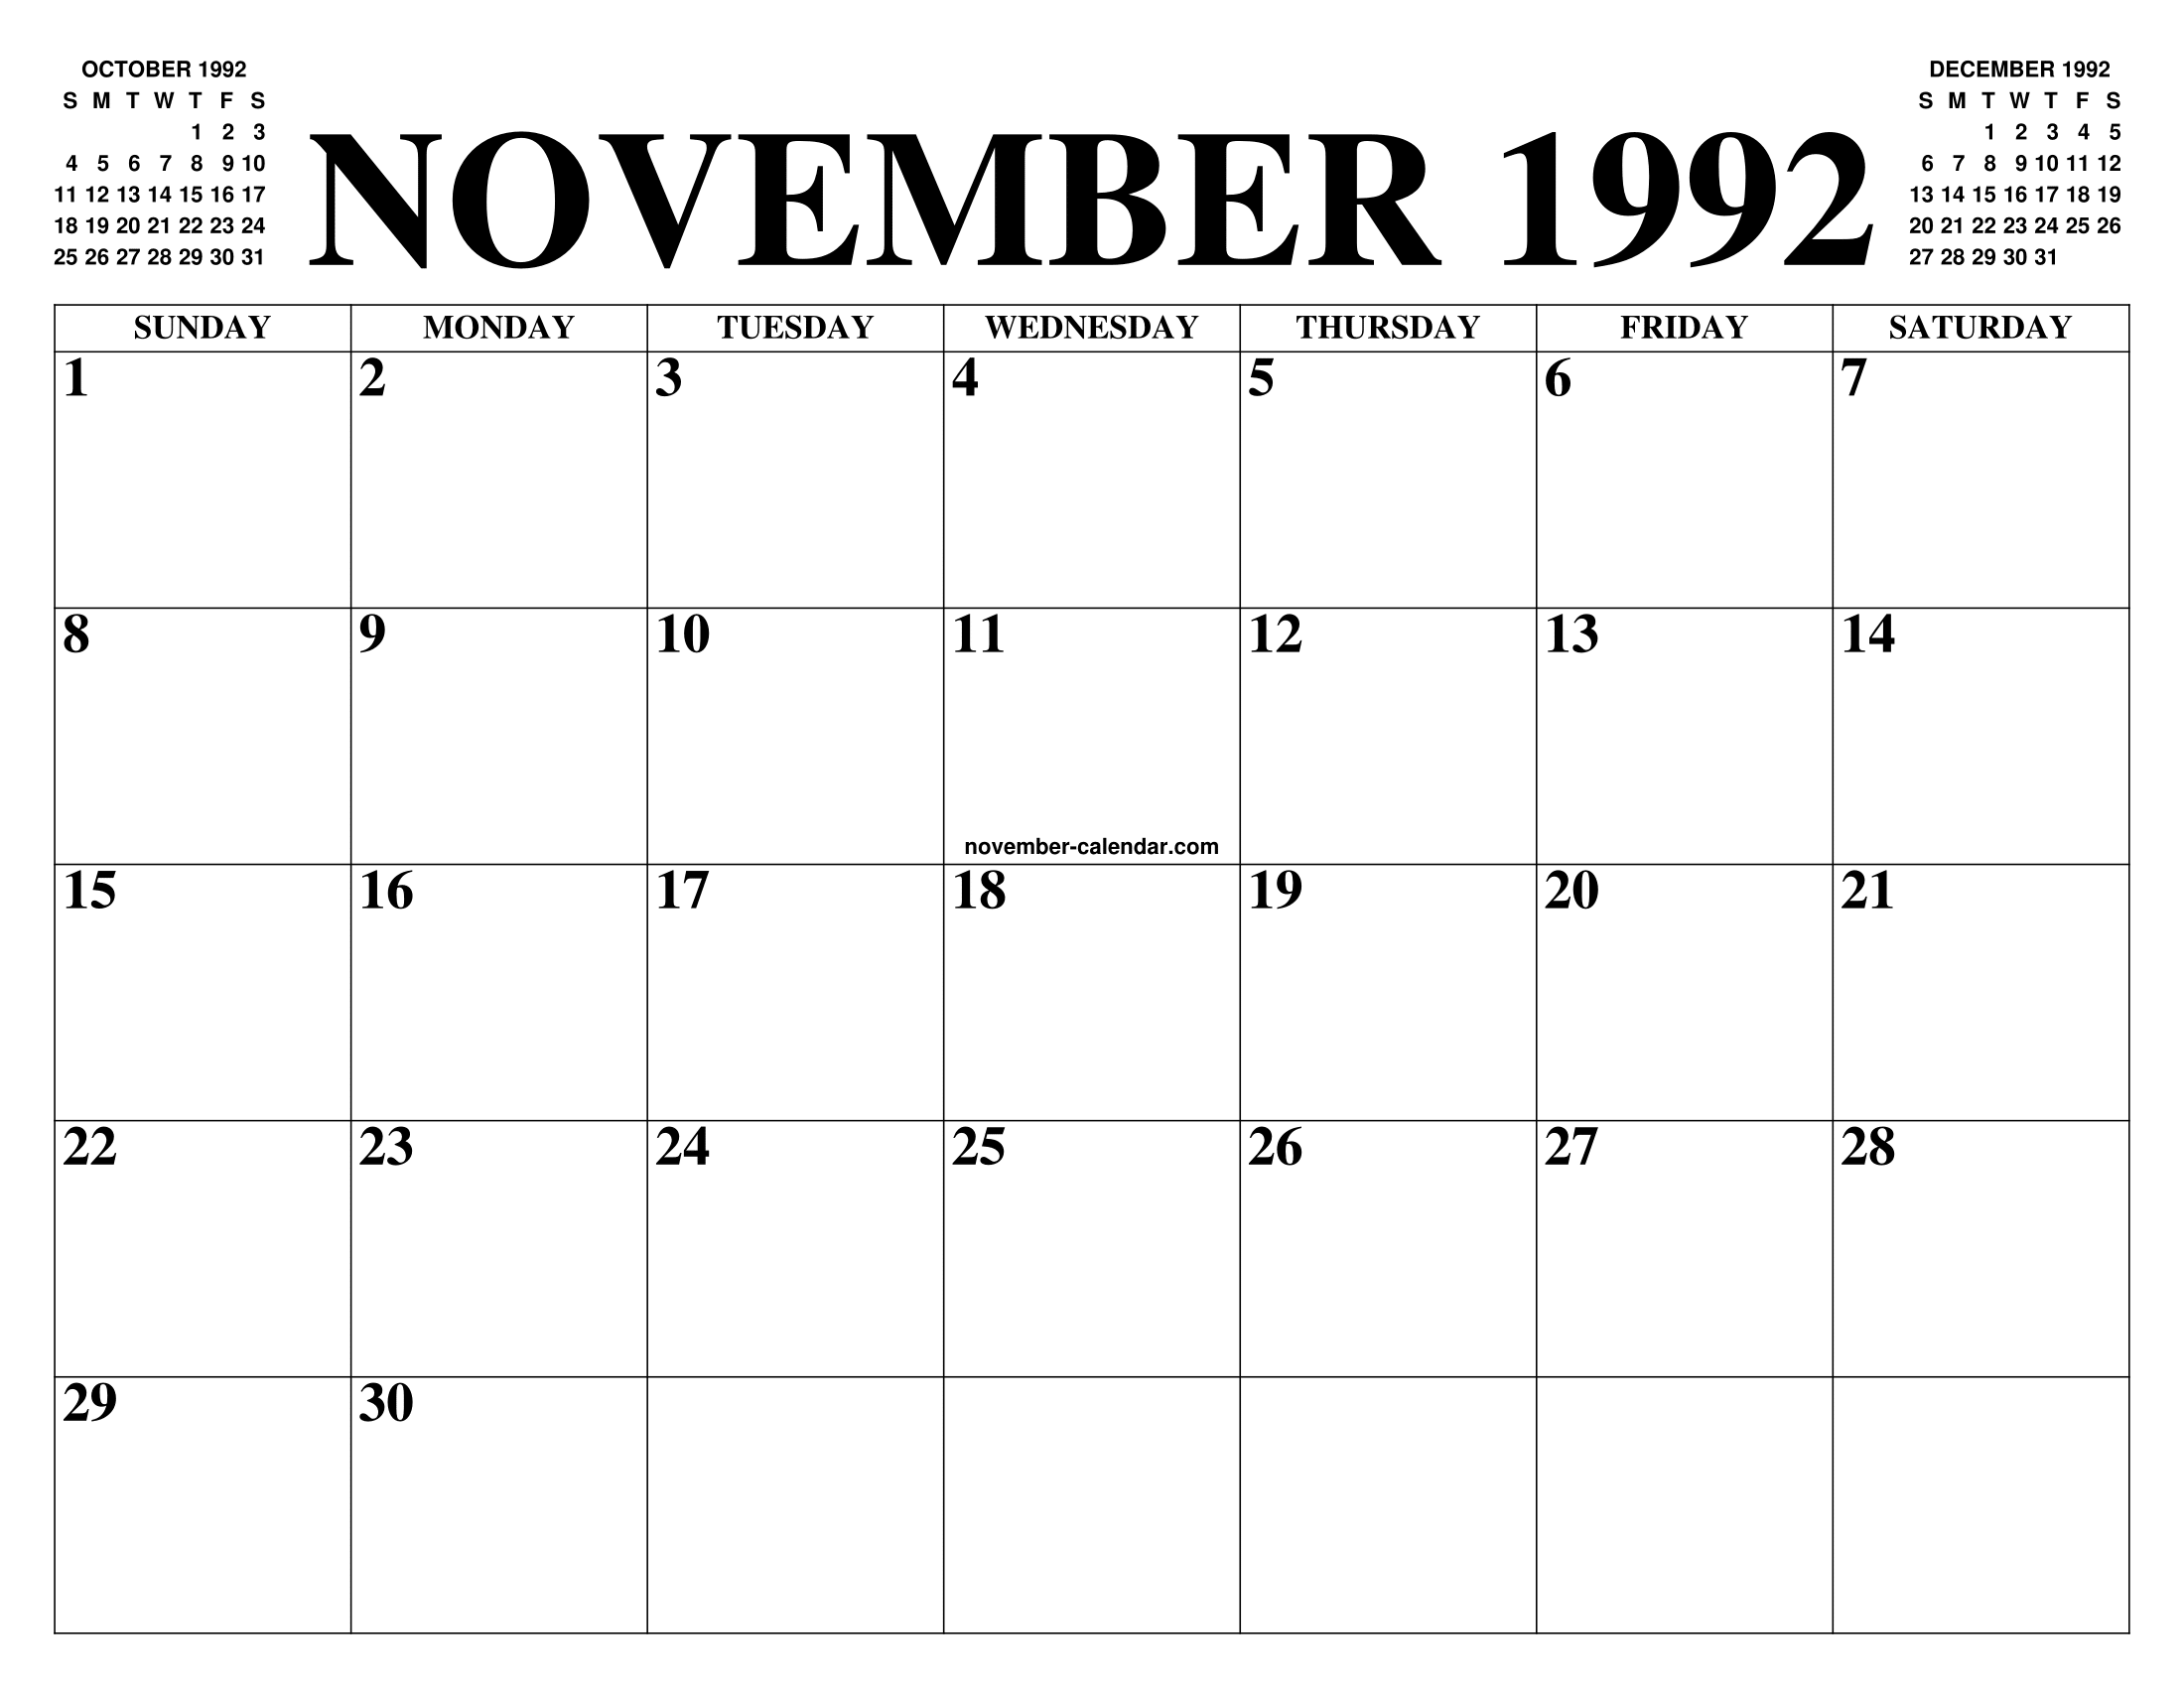 NOVEMBER 1992 CALENDAR OF THE MONTH: FREE PRINTABLE NOVEMBER CALENDAR